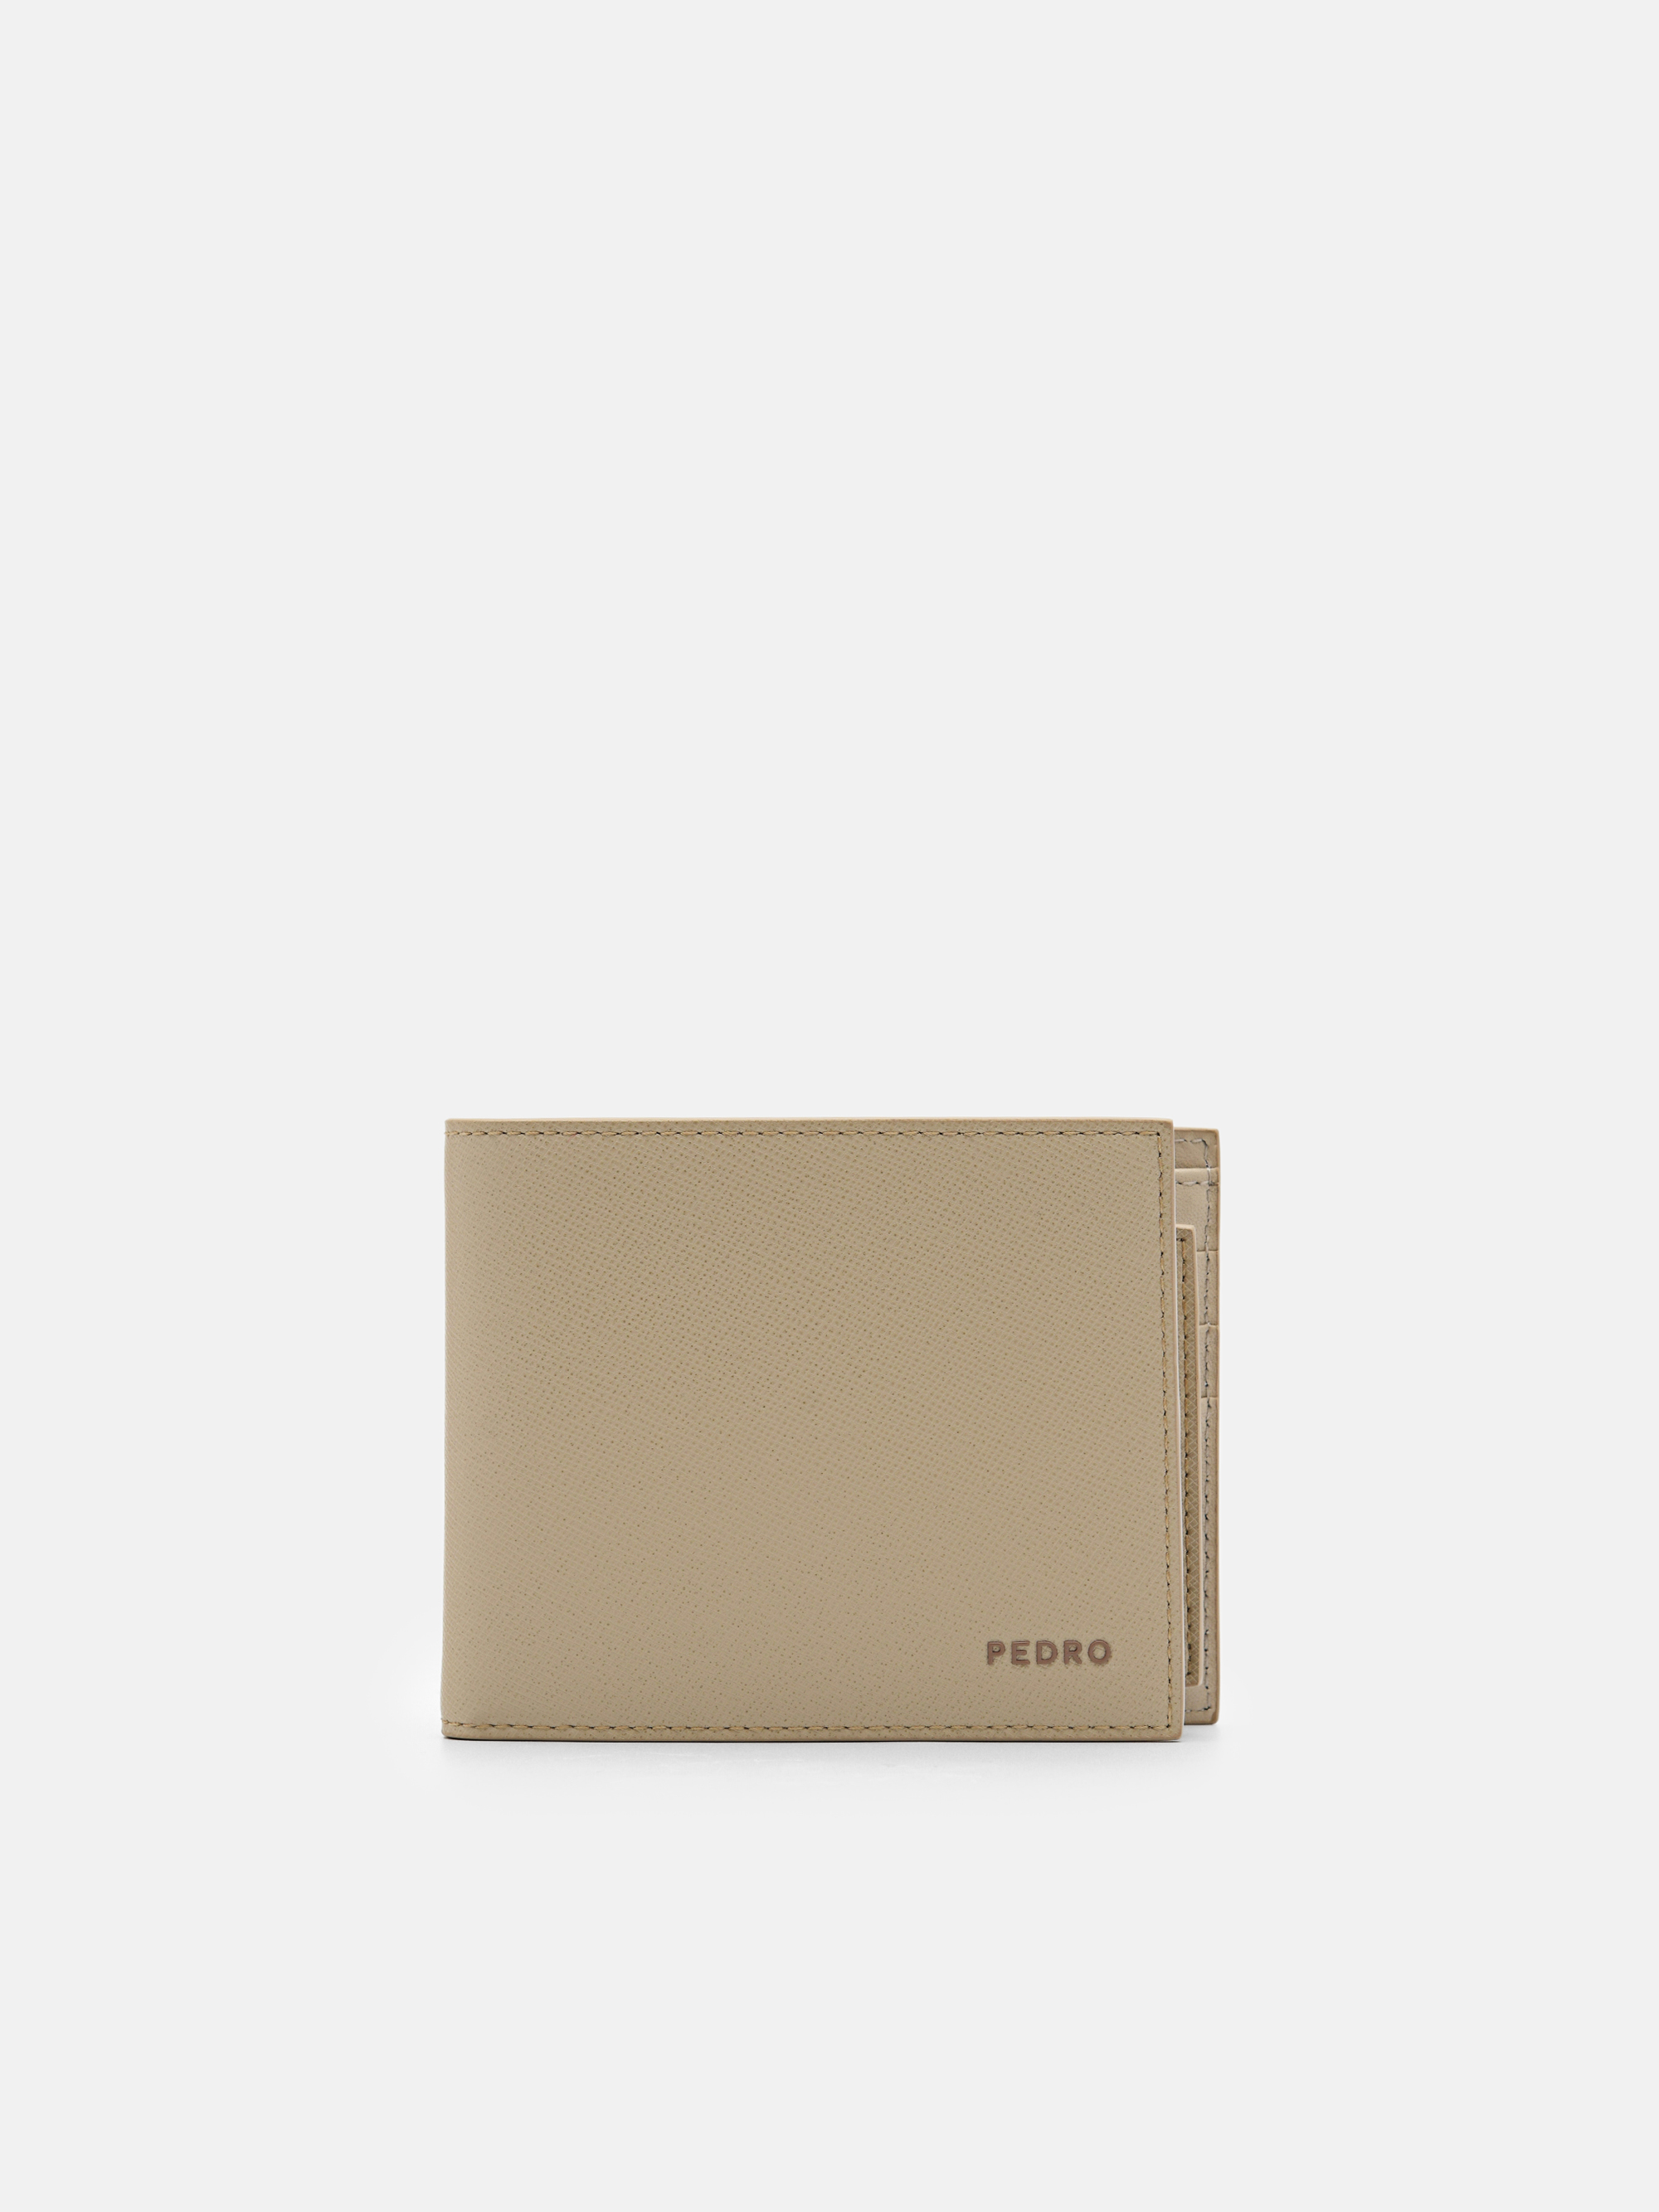 Leather Bi-Fold Insert Wallet - PEDRO SG